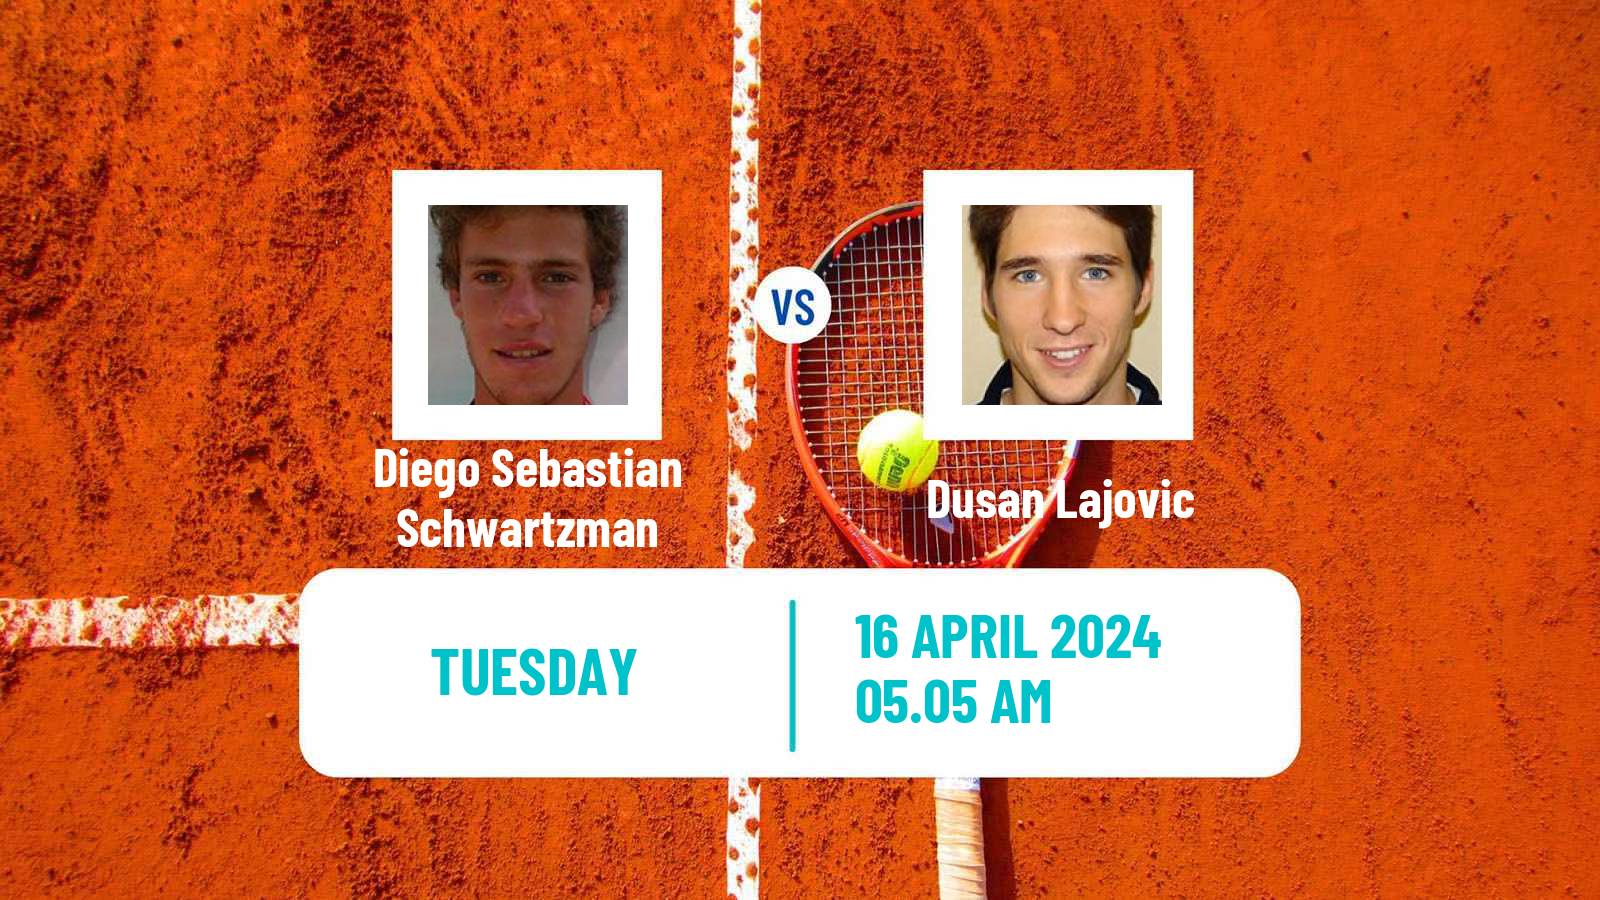 Tennis ATP Barcelona Diego Sebastian Schwartzman - Dusan Lajovic